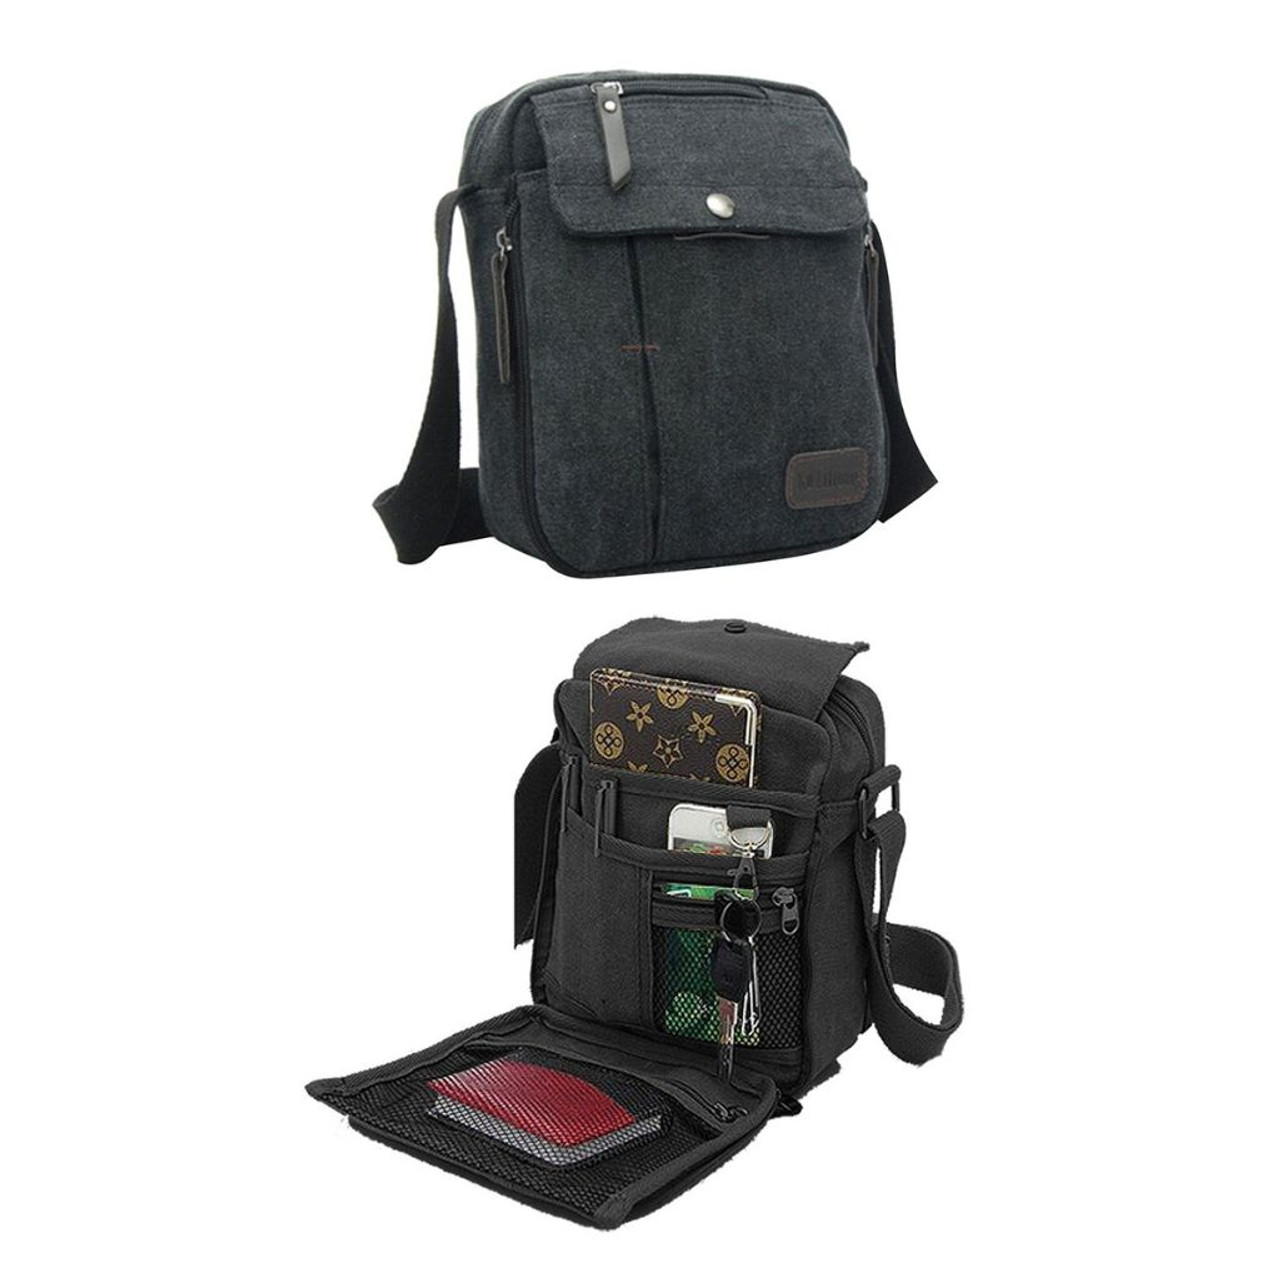 Multifunctional Canvas Bag With Adjustable Shoulder Strap product image